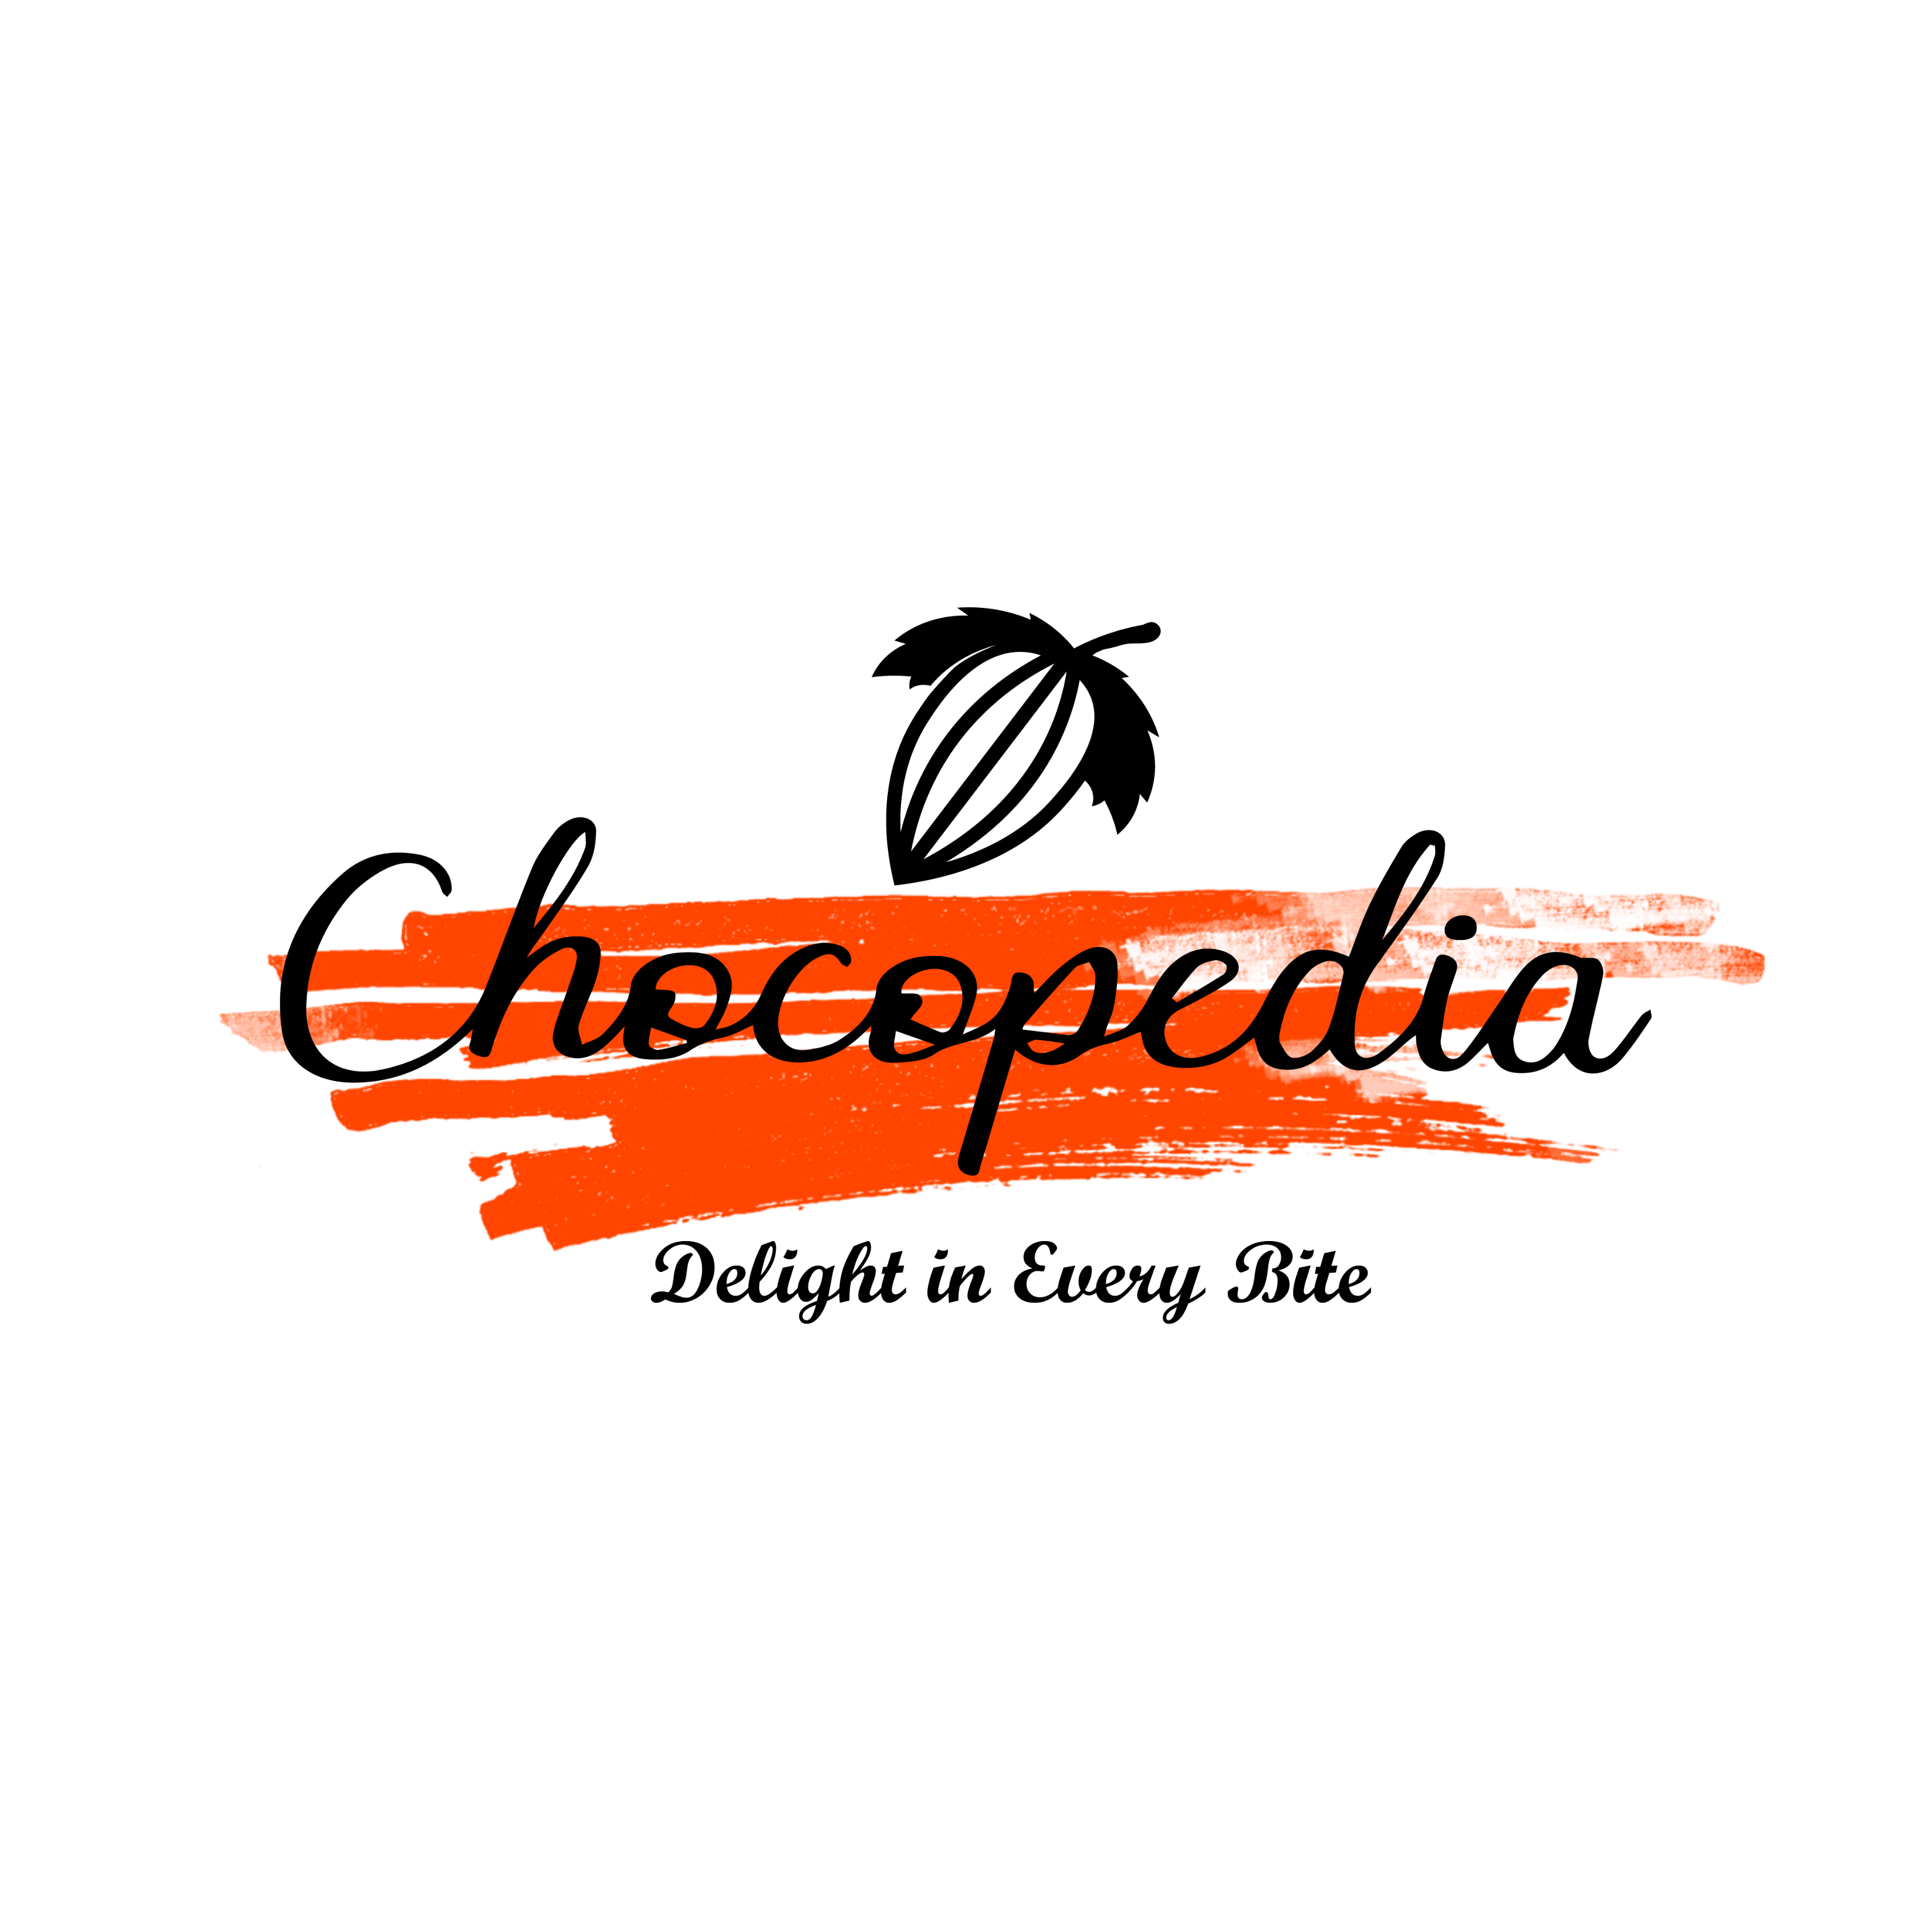 chcopedia logo (3)